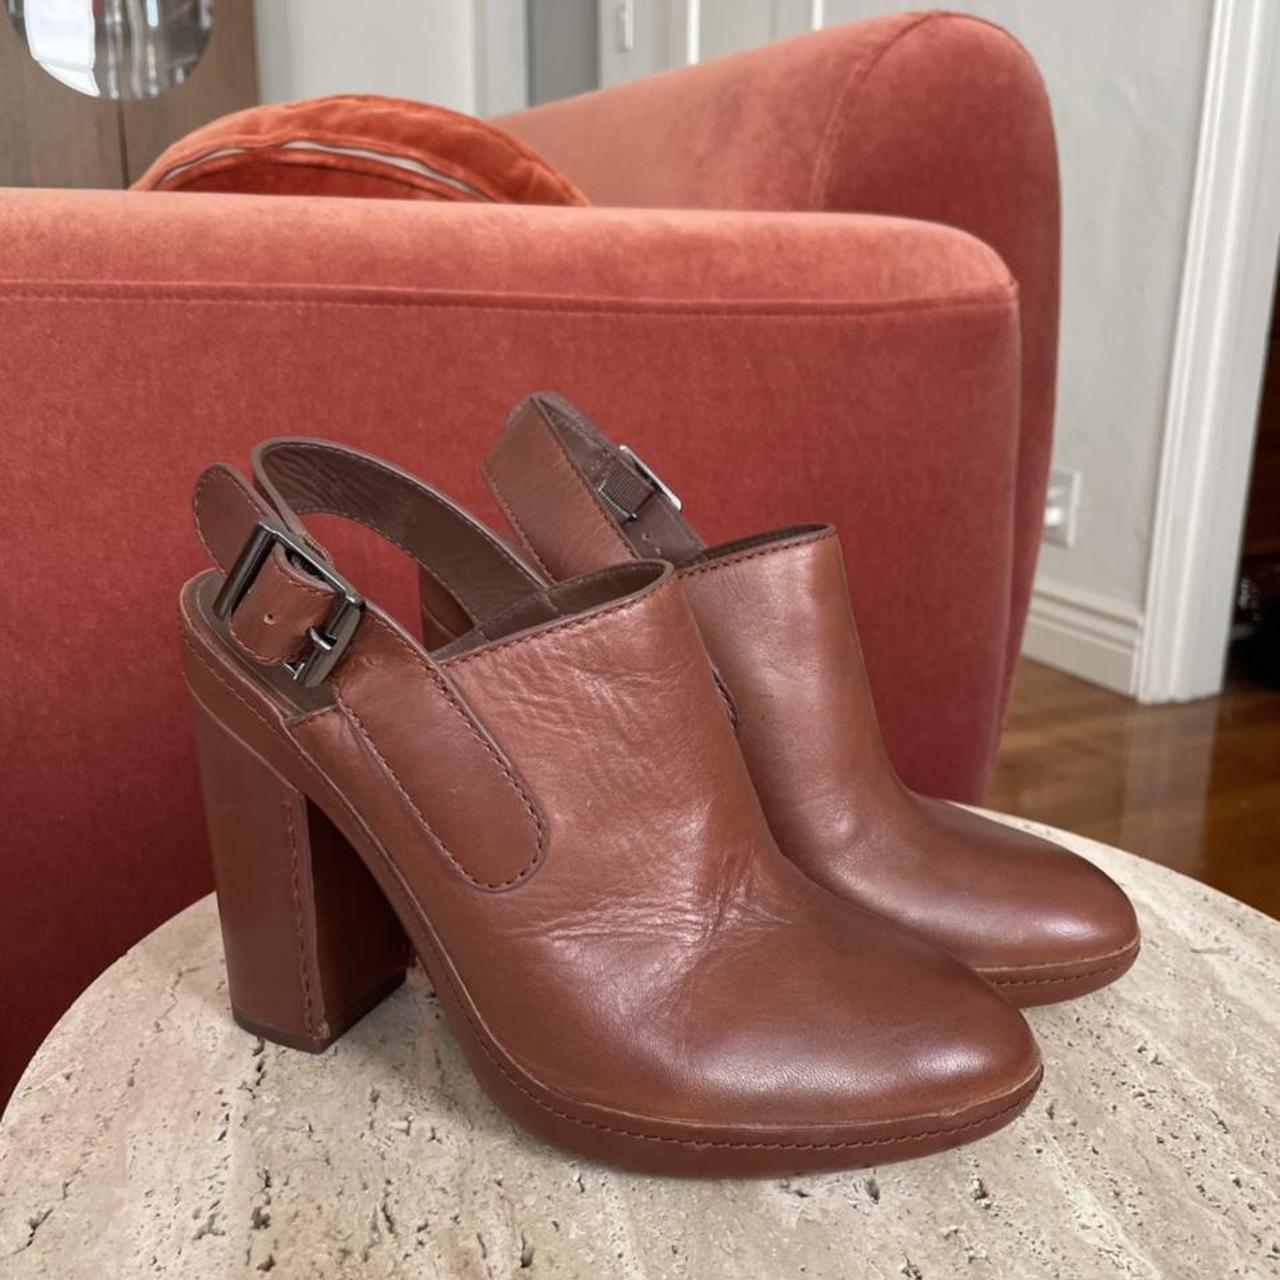 Product Image 1 - vince platform leather heels. fully